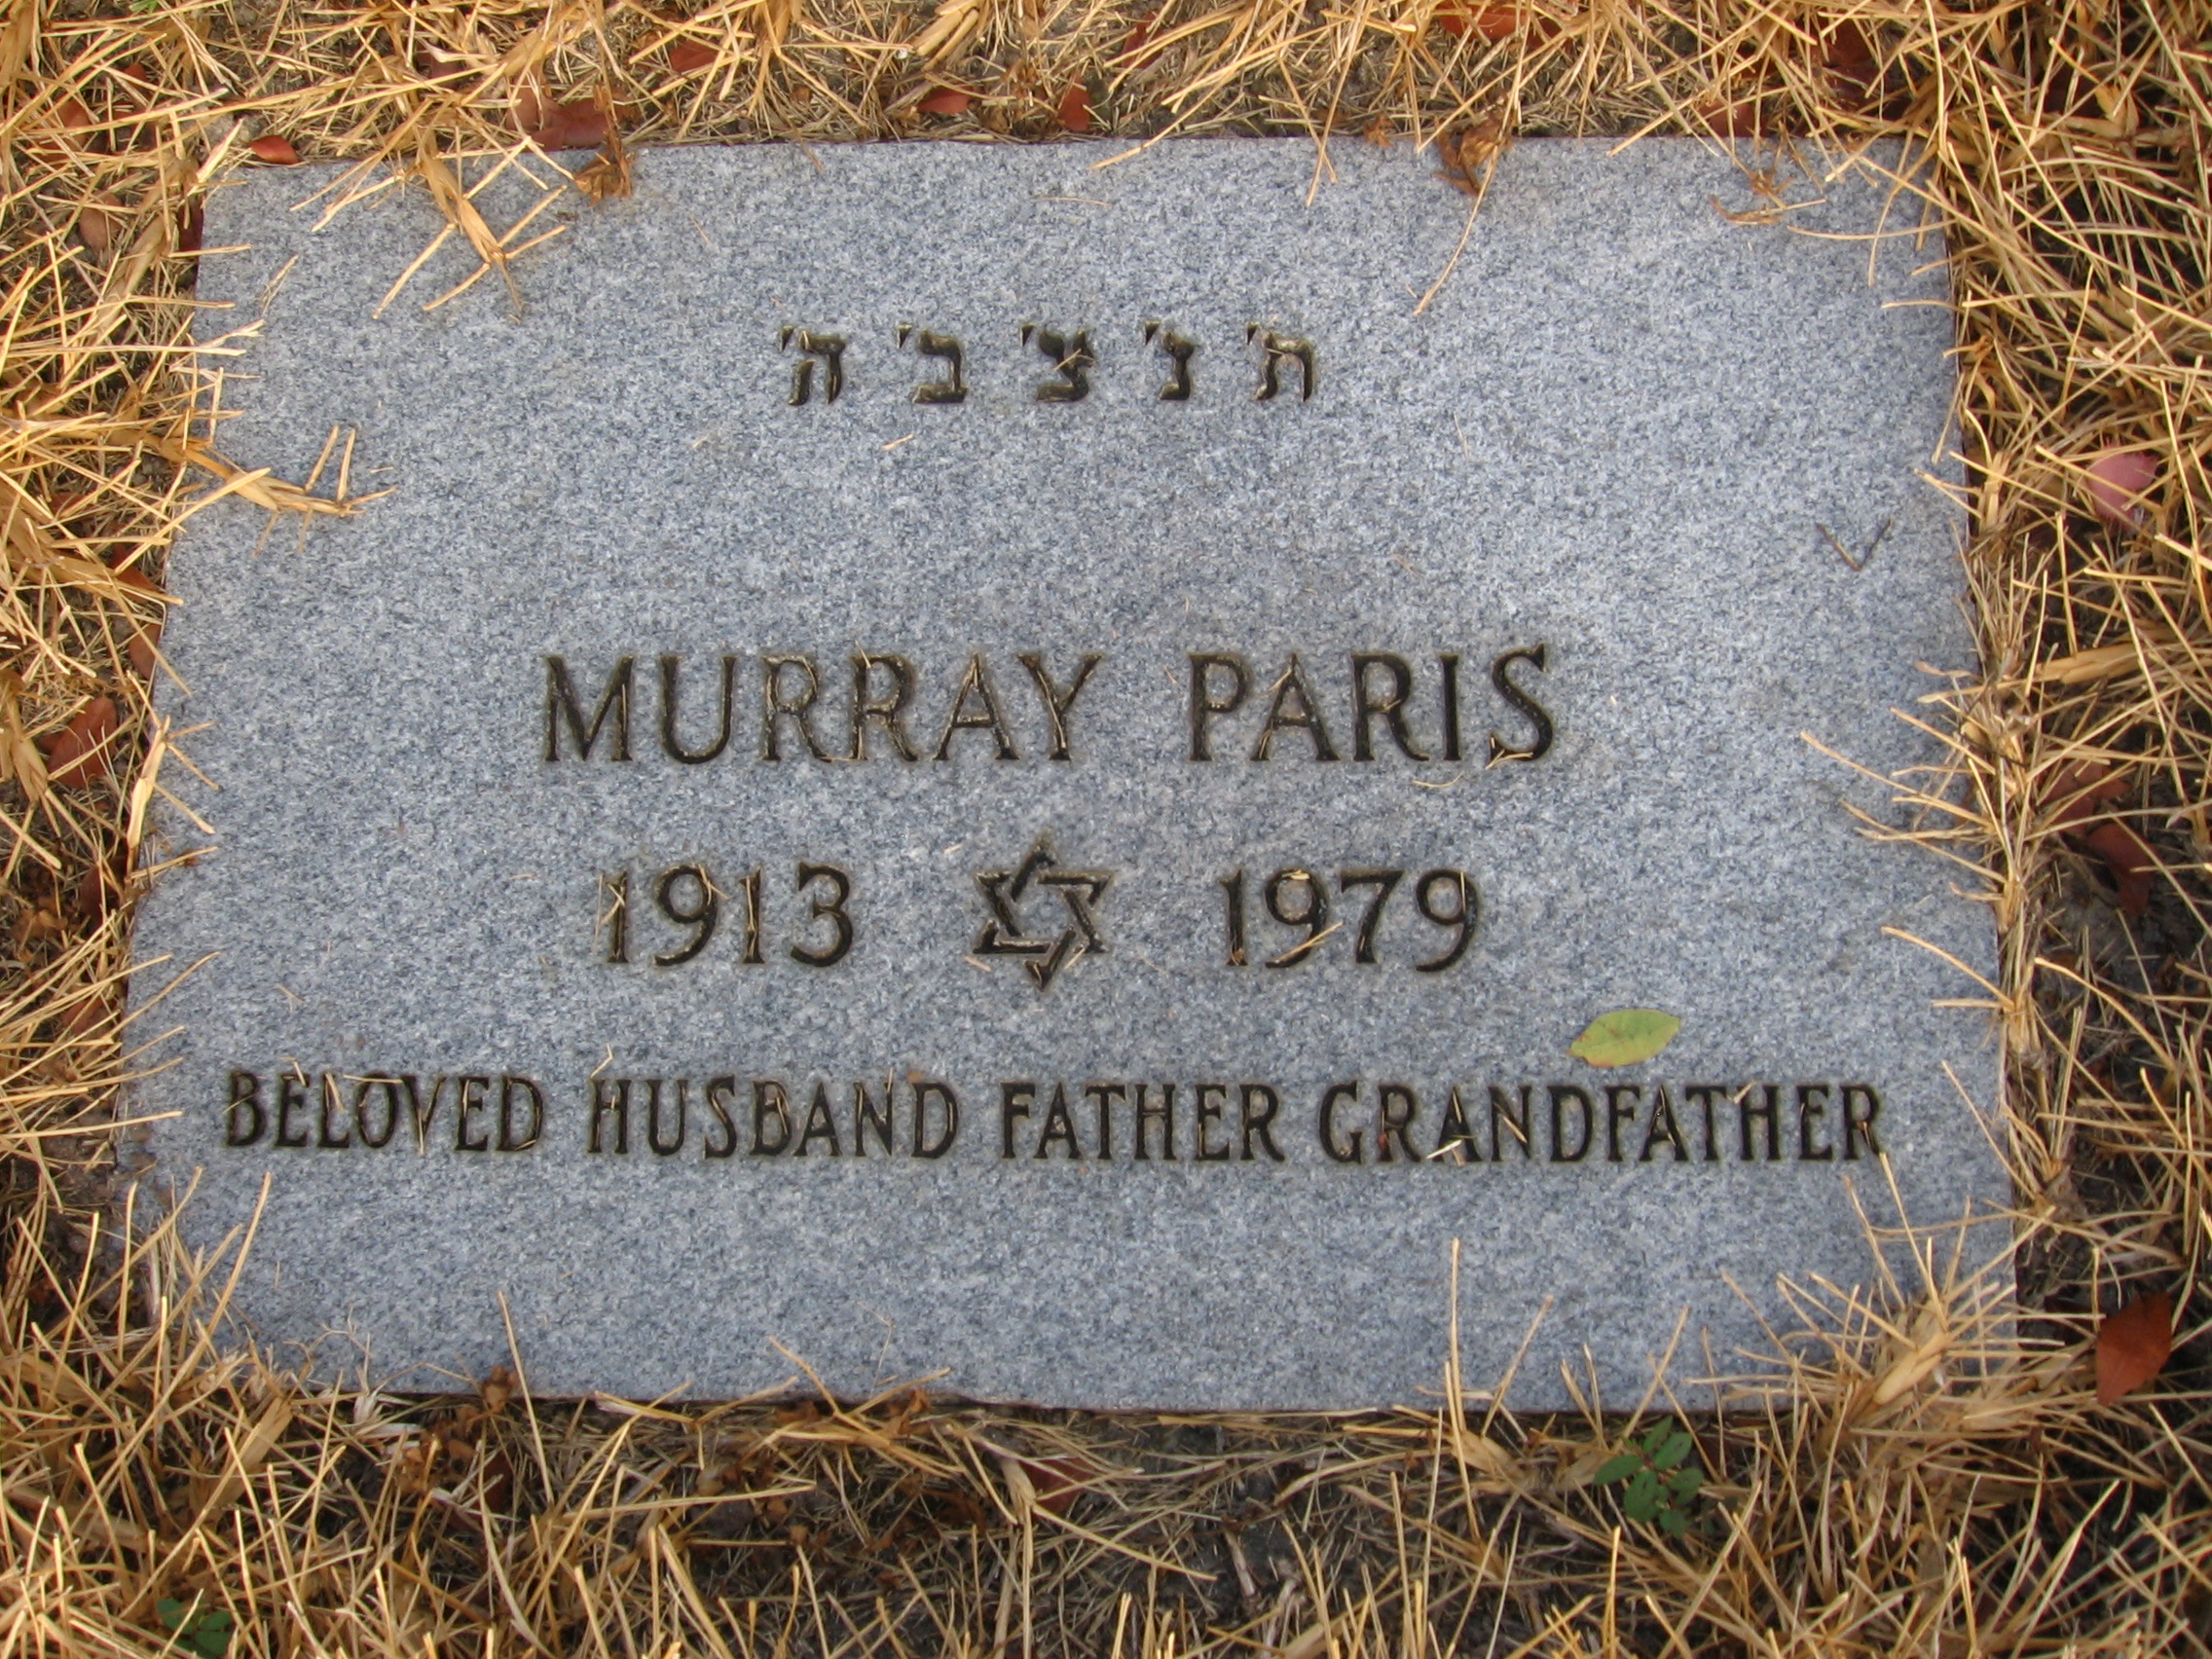 Murray Paris